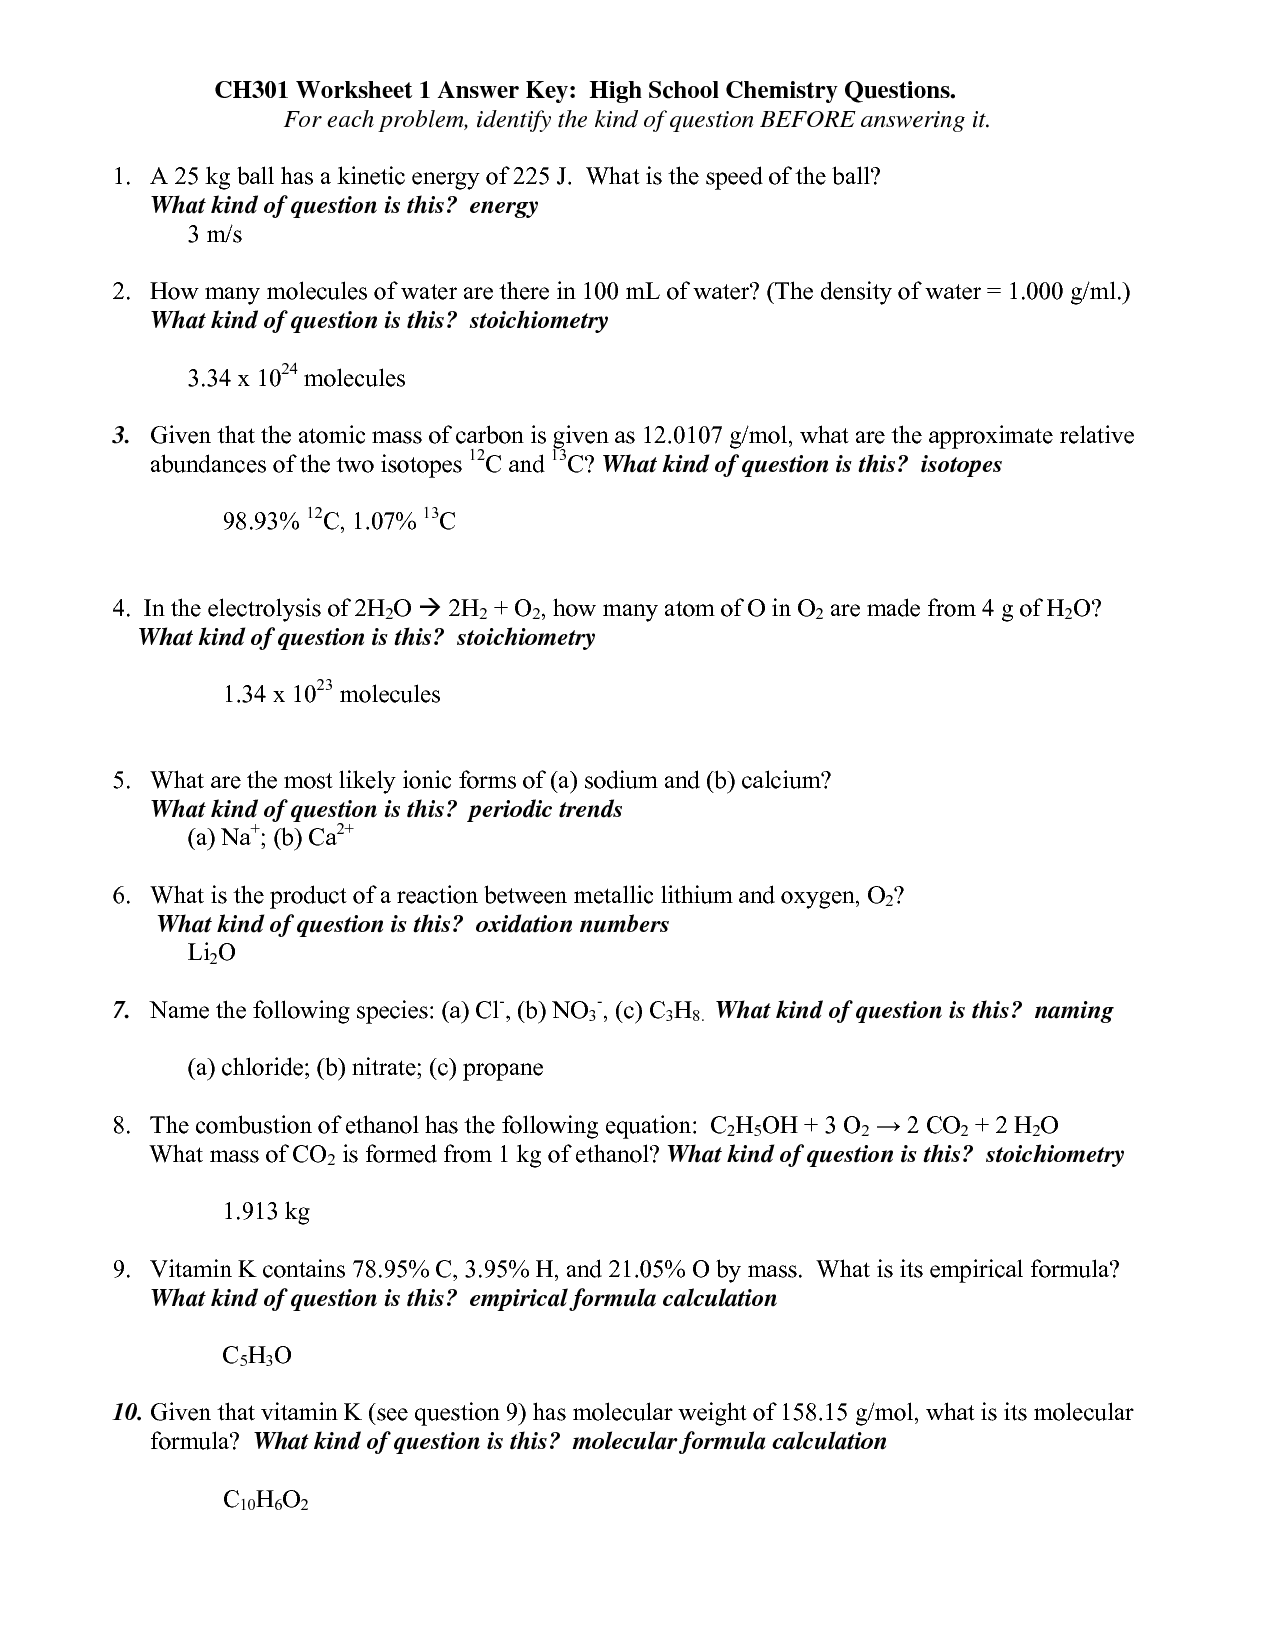 High School Chemistry Worksheet Answers